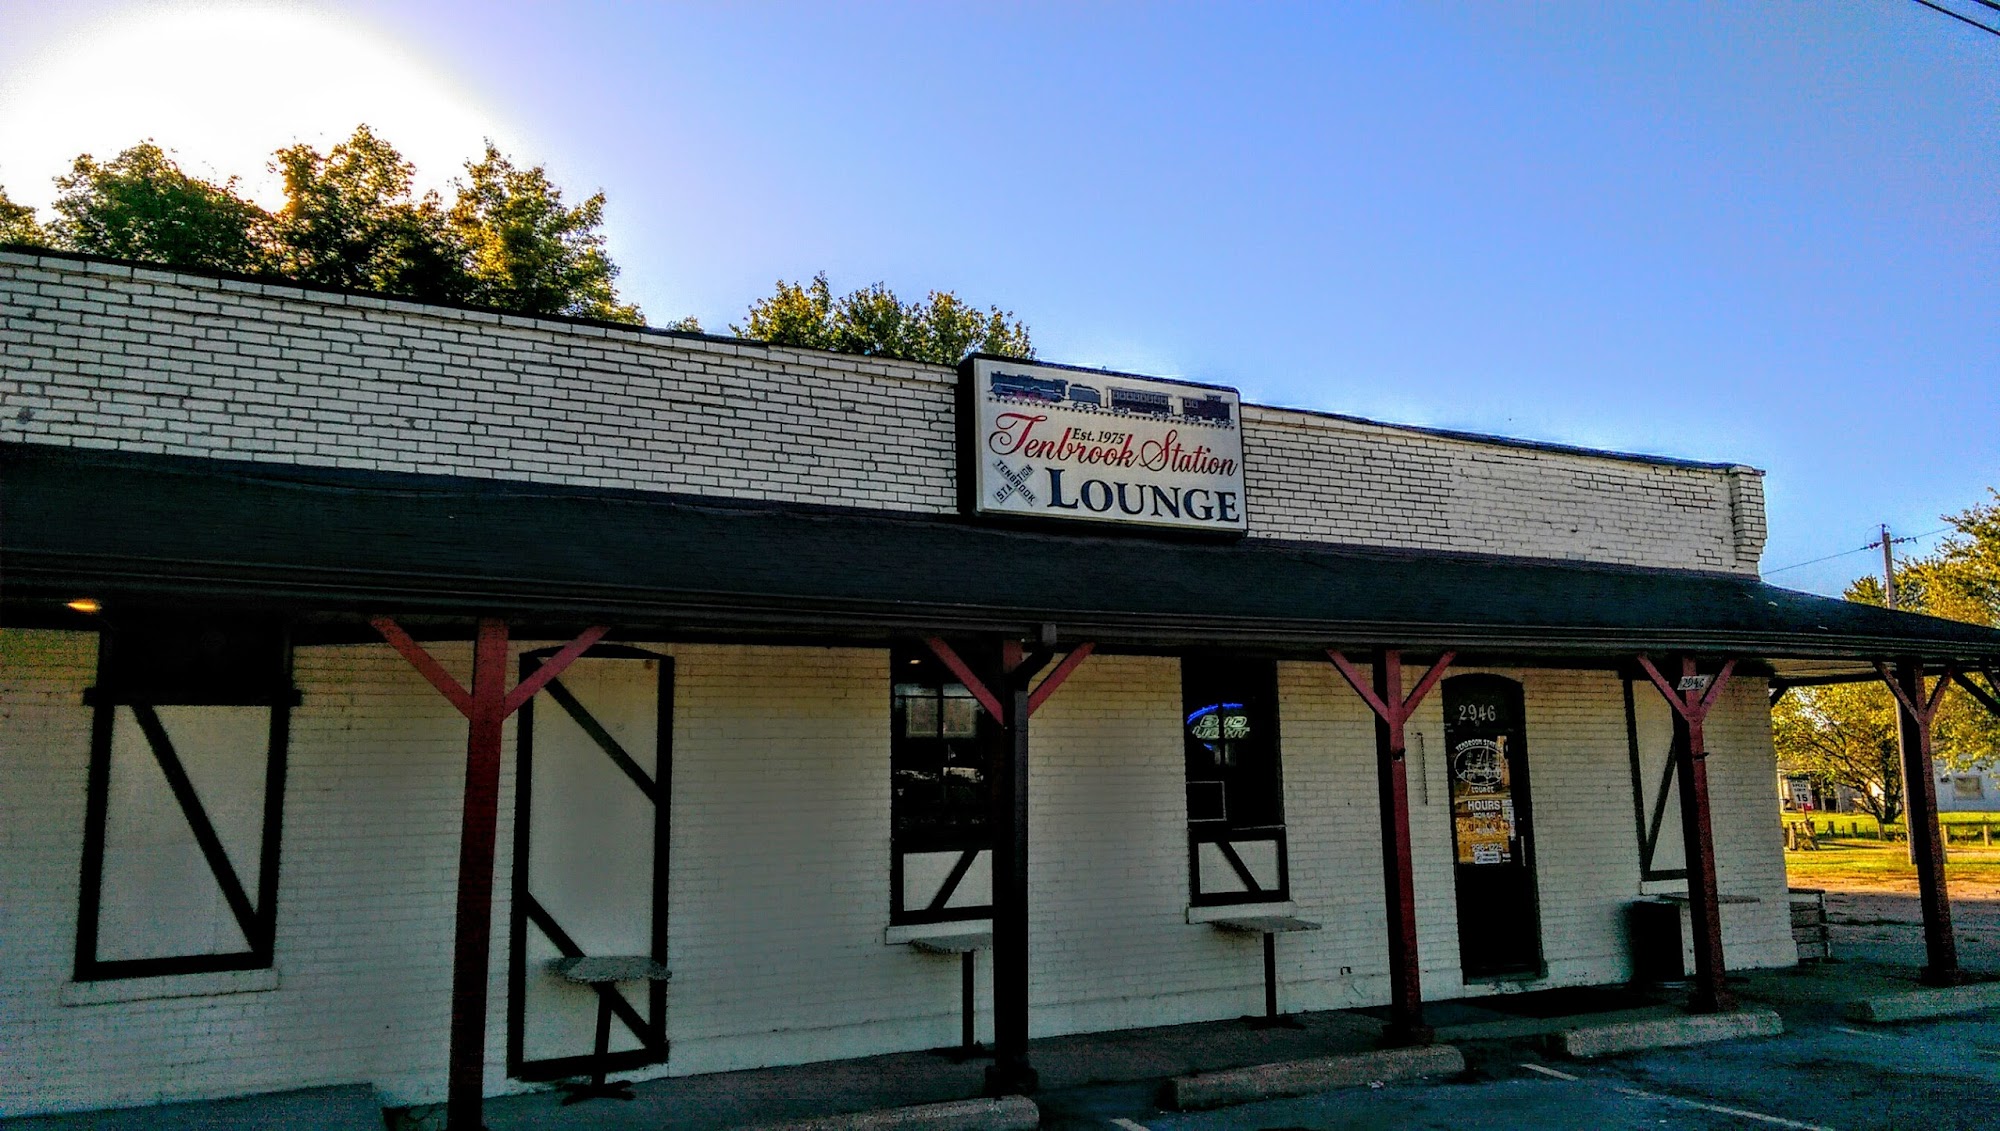 Tenbrook Station Lounge